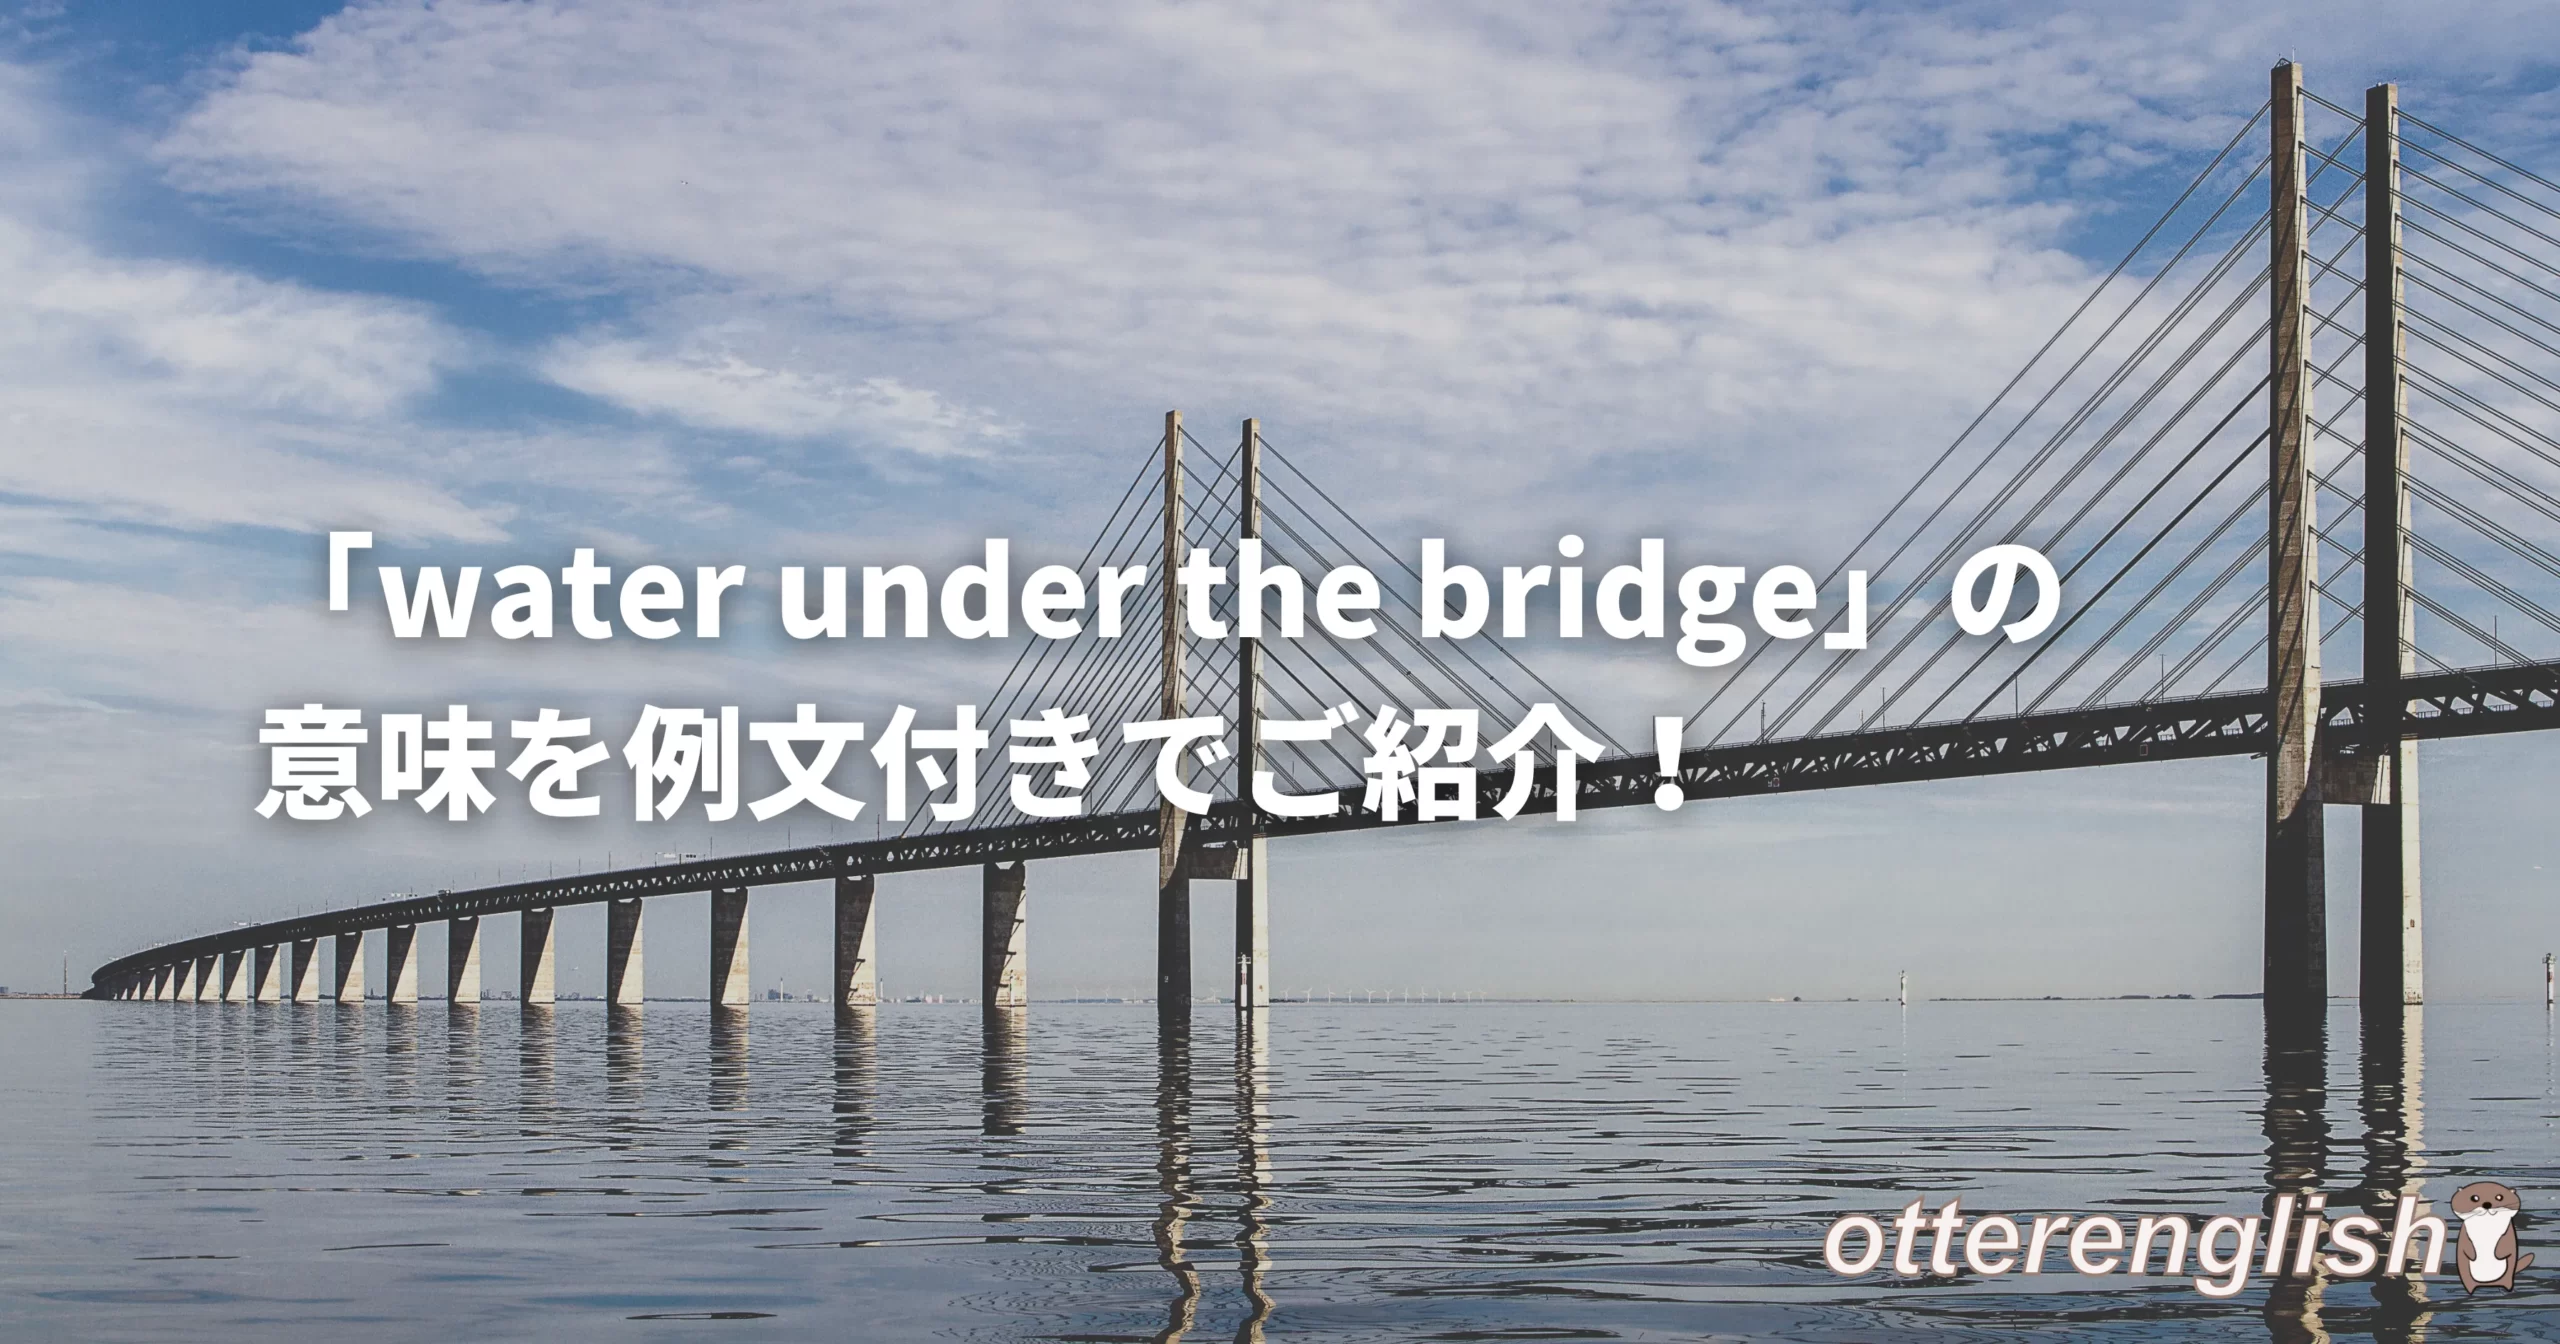 water under the bridgeを表した綺麗な橋と川の画像